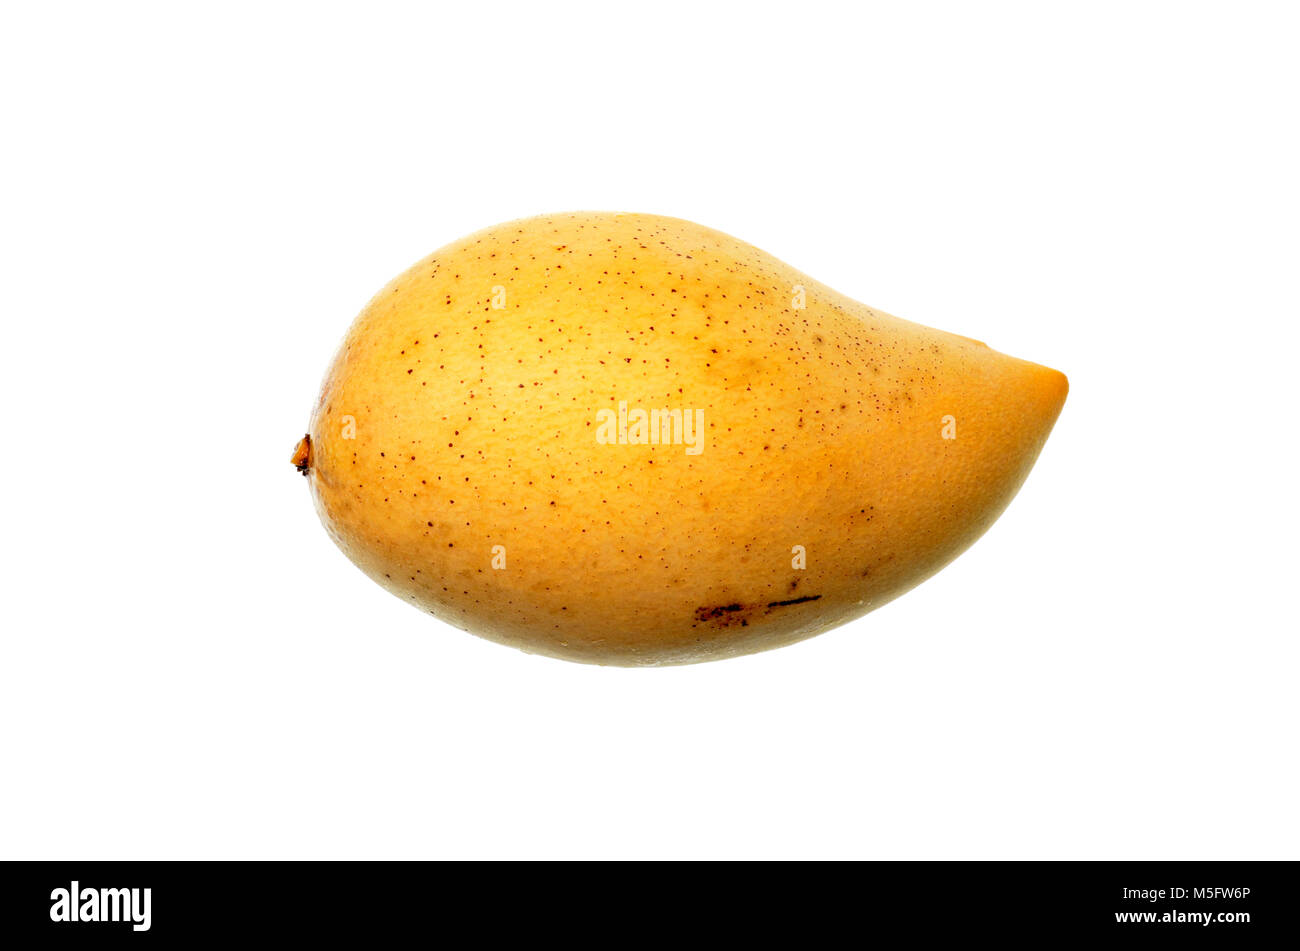 Isolate yelloe mango, a close up photo image of ripe yellow organic mango isolate on bright whitw light background present a dapple blemish pattern an Stock Photo